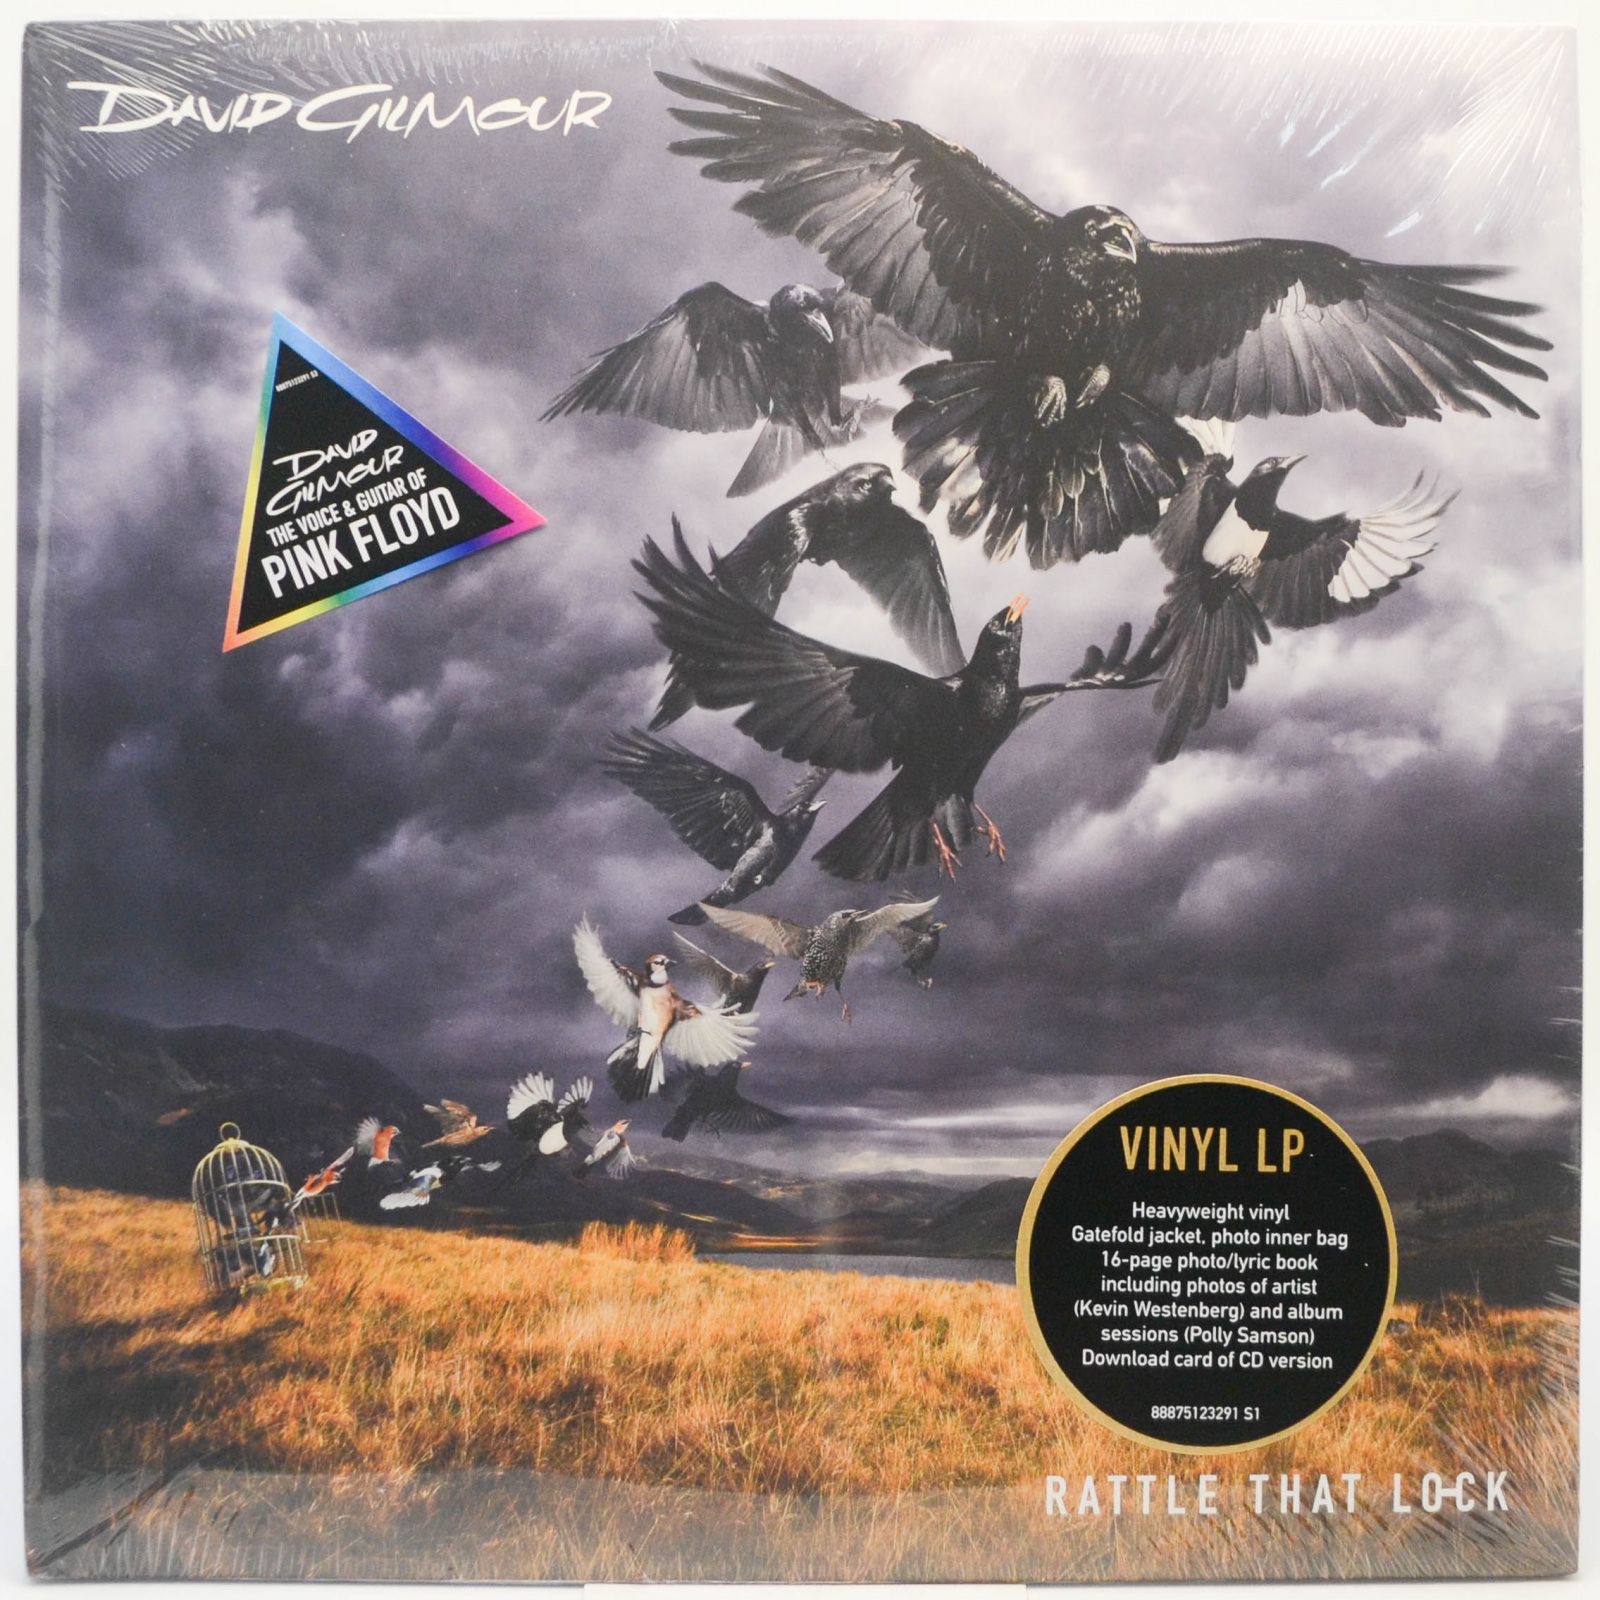 David Gilmour — Rattle That Lock, 2015